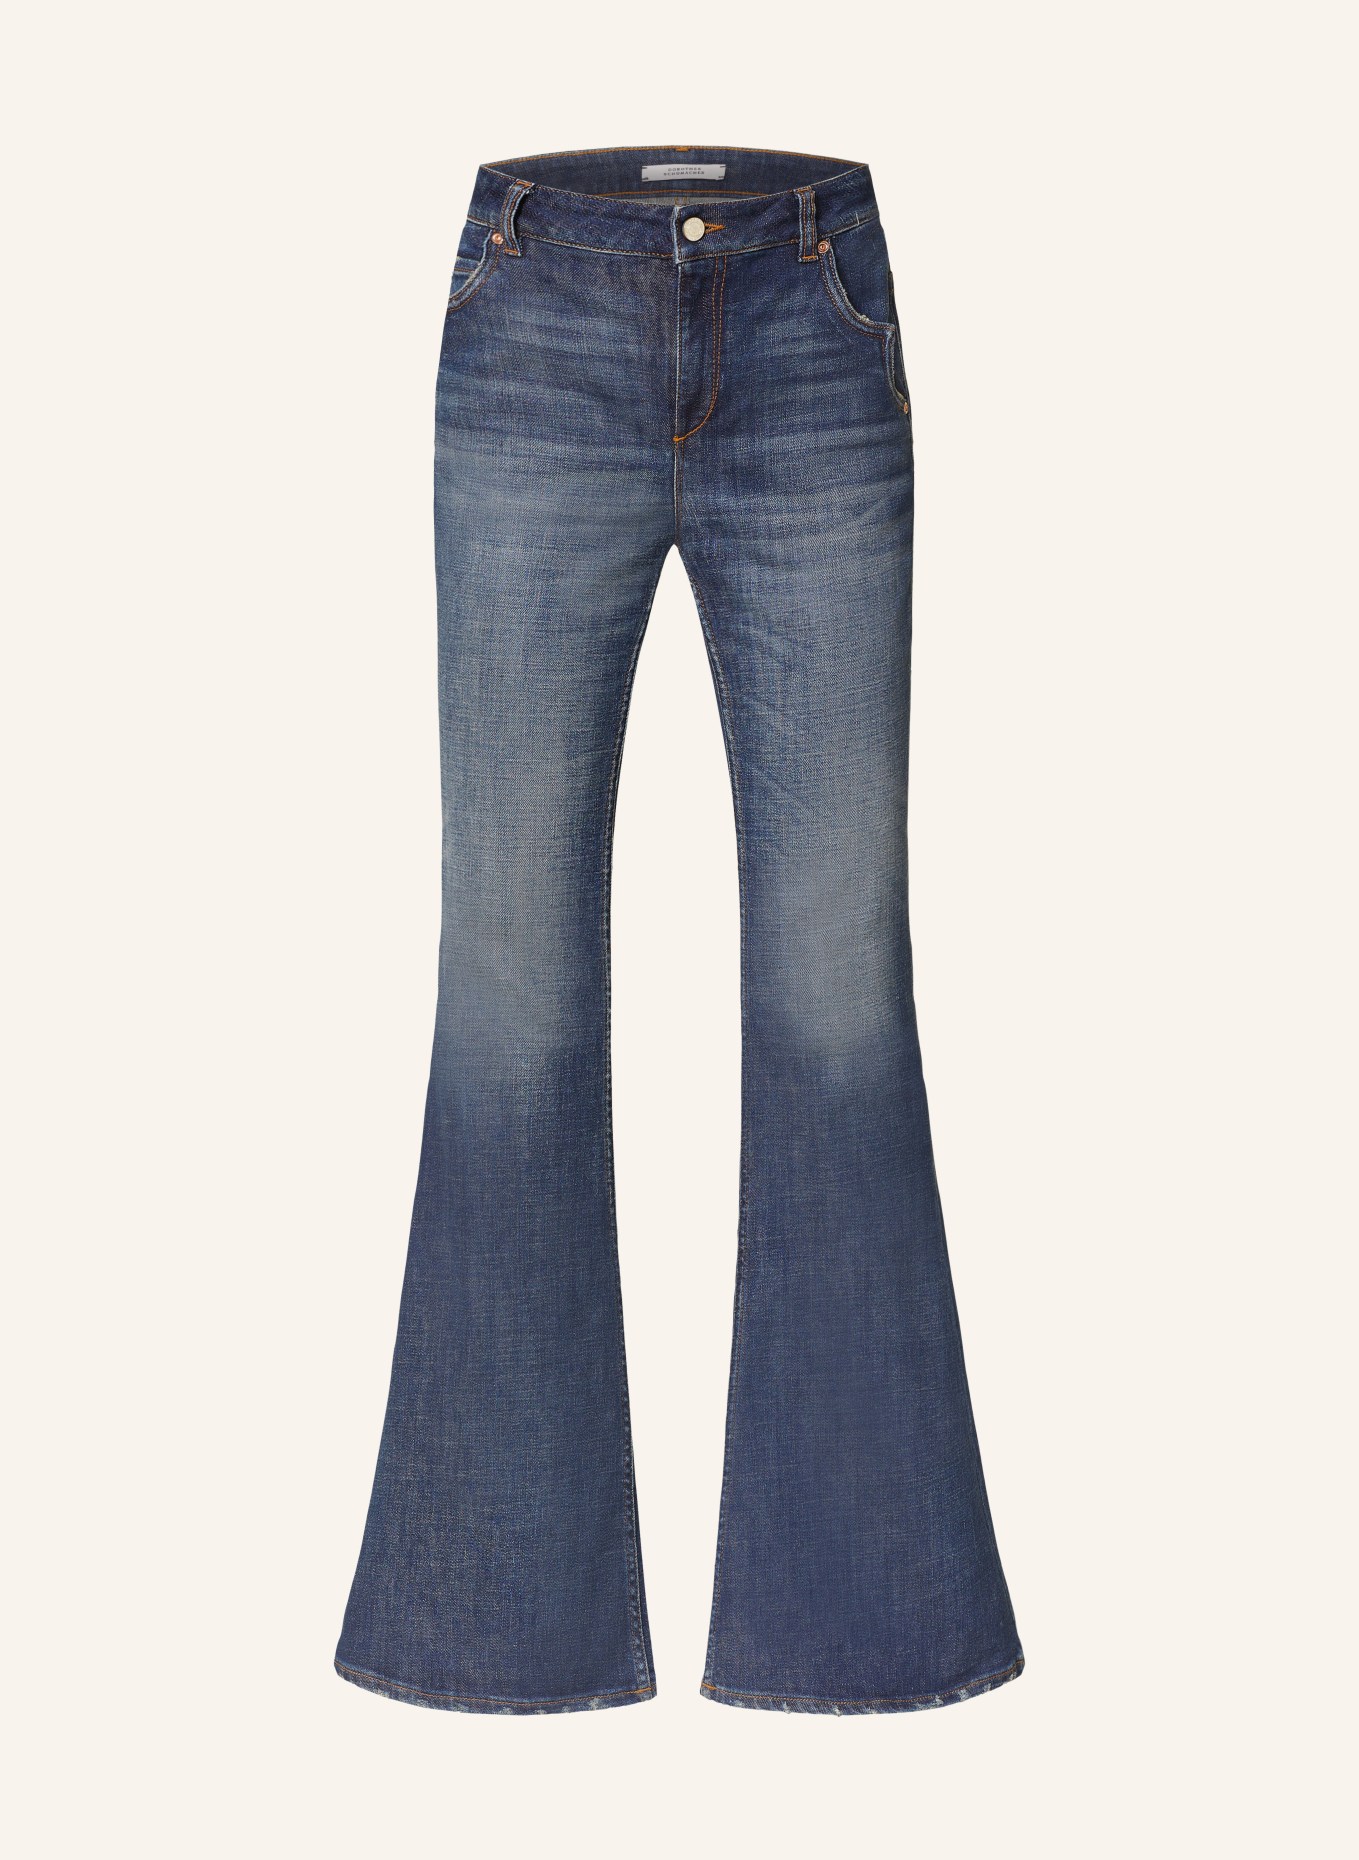 DOROTHEE SCHUMACHER Flared Jeans DENIM LOVE PANTS, Farbe: 872 Denim (Bild 1)